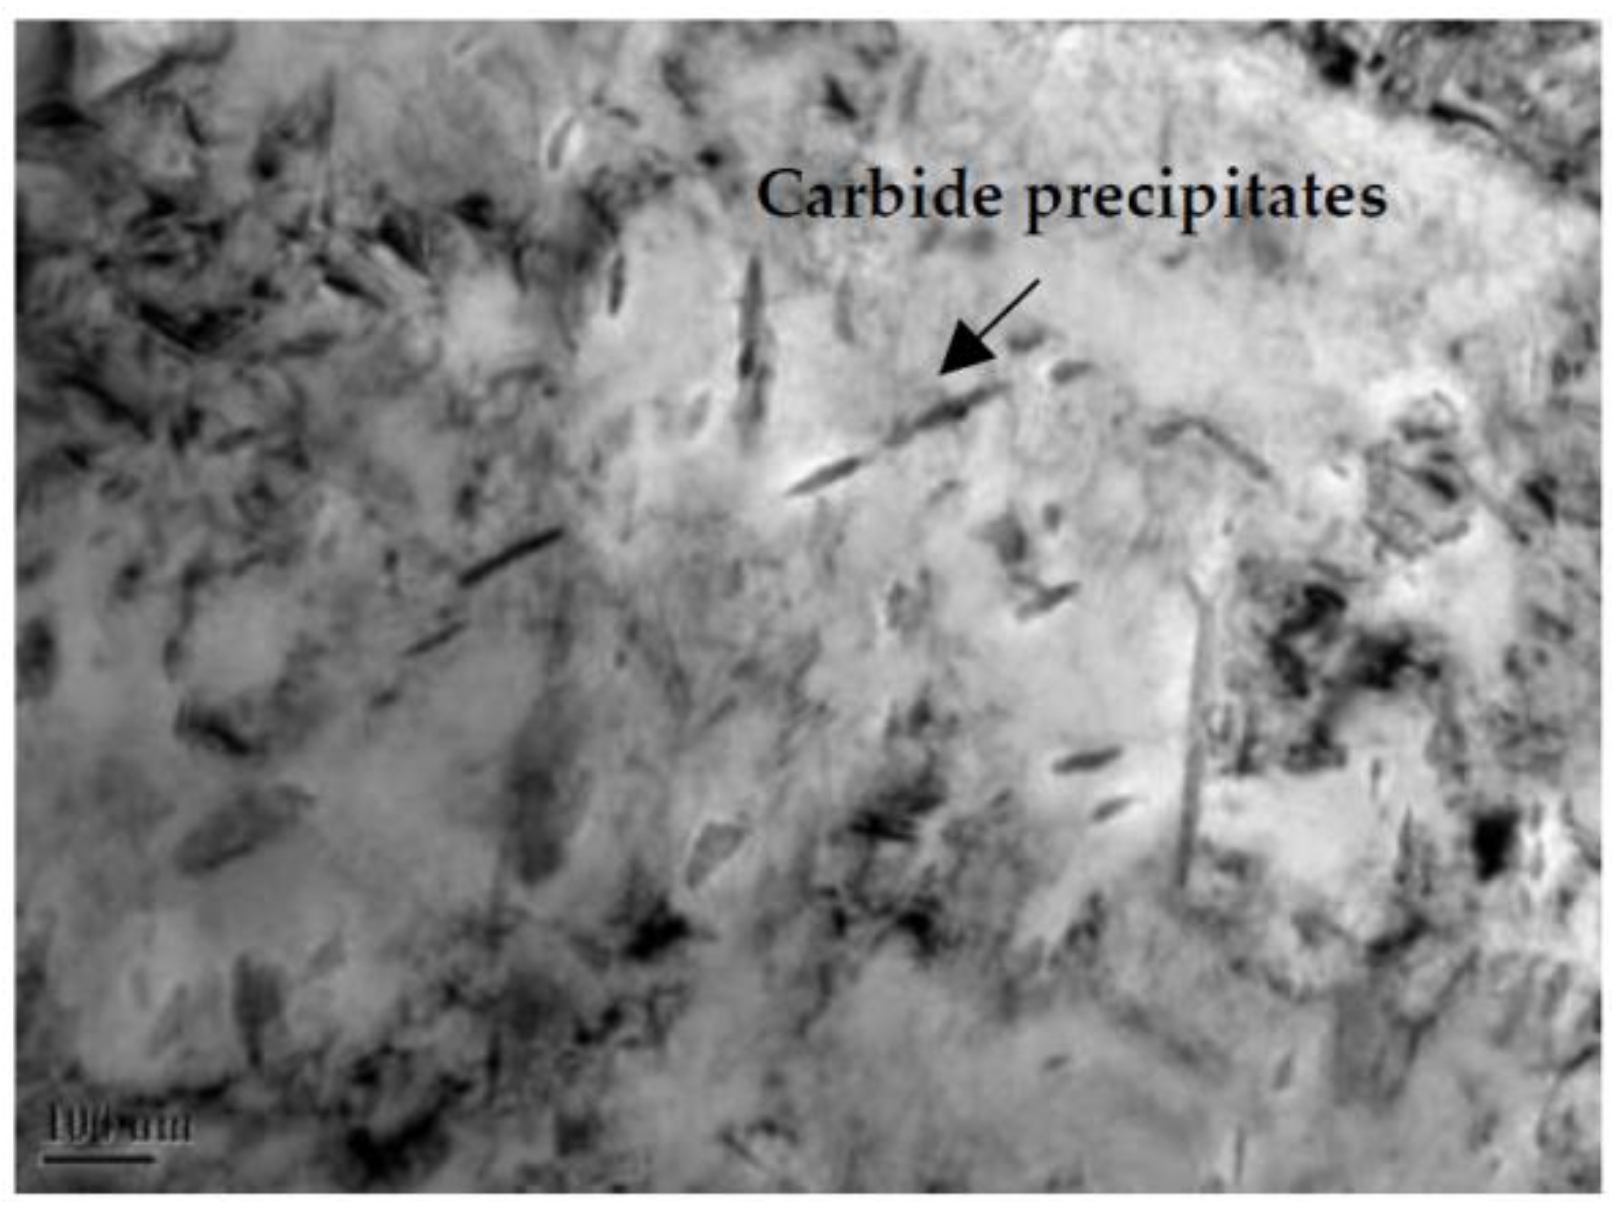 TEM characterization of the carbide precipitates.